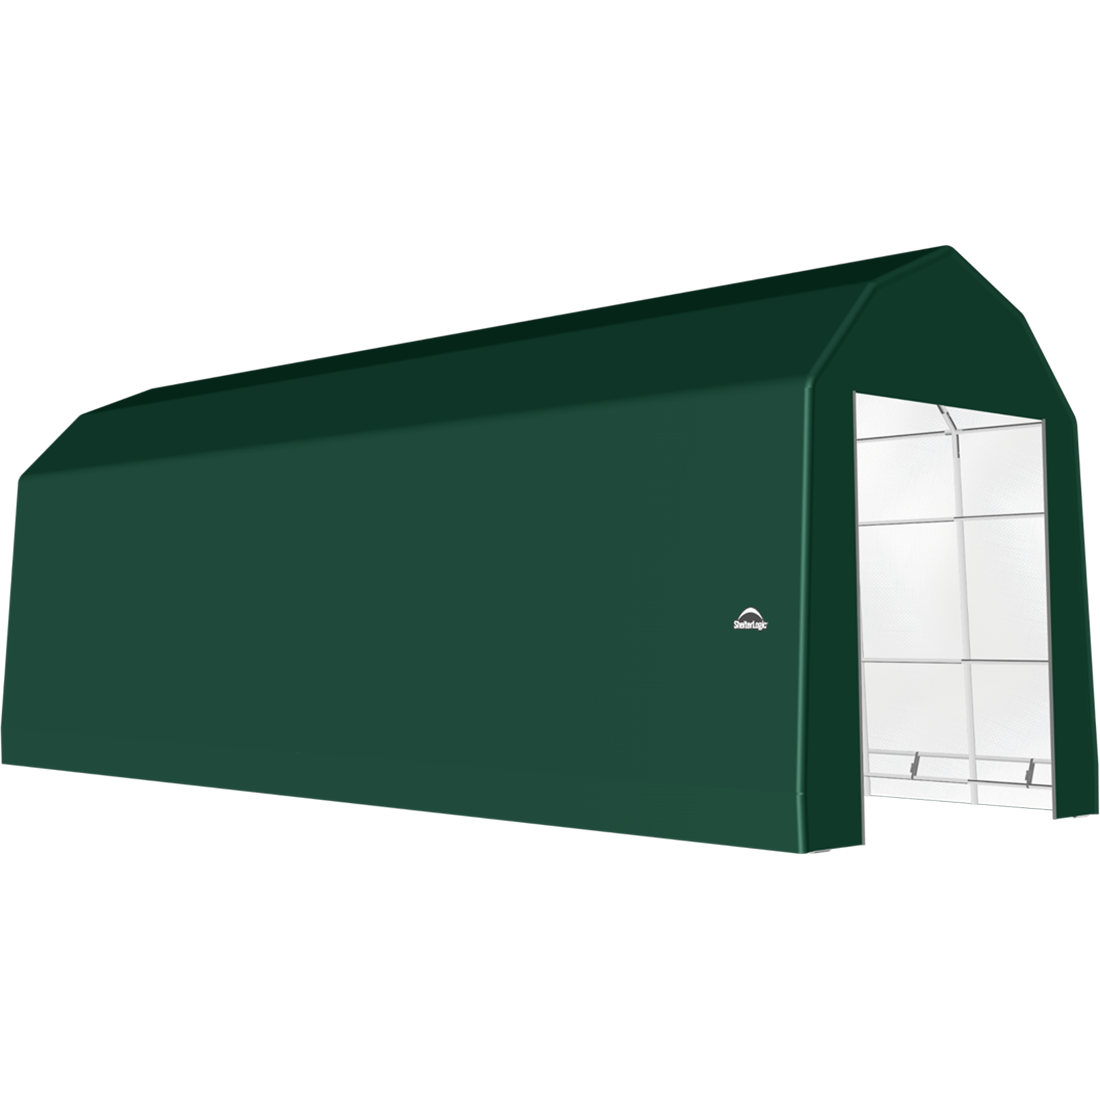 ShelterTech SP Series Barn Shelter, 15 ft. x 36 ft. x 17 ft. Heavy Duty PVC 14.5 oz. Green